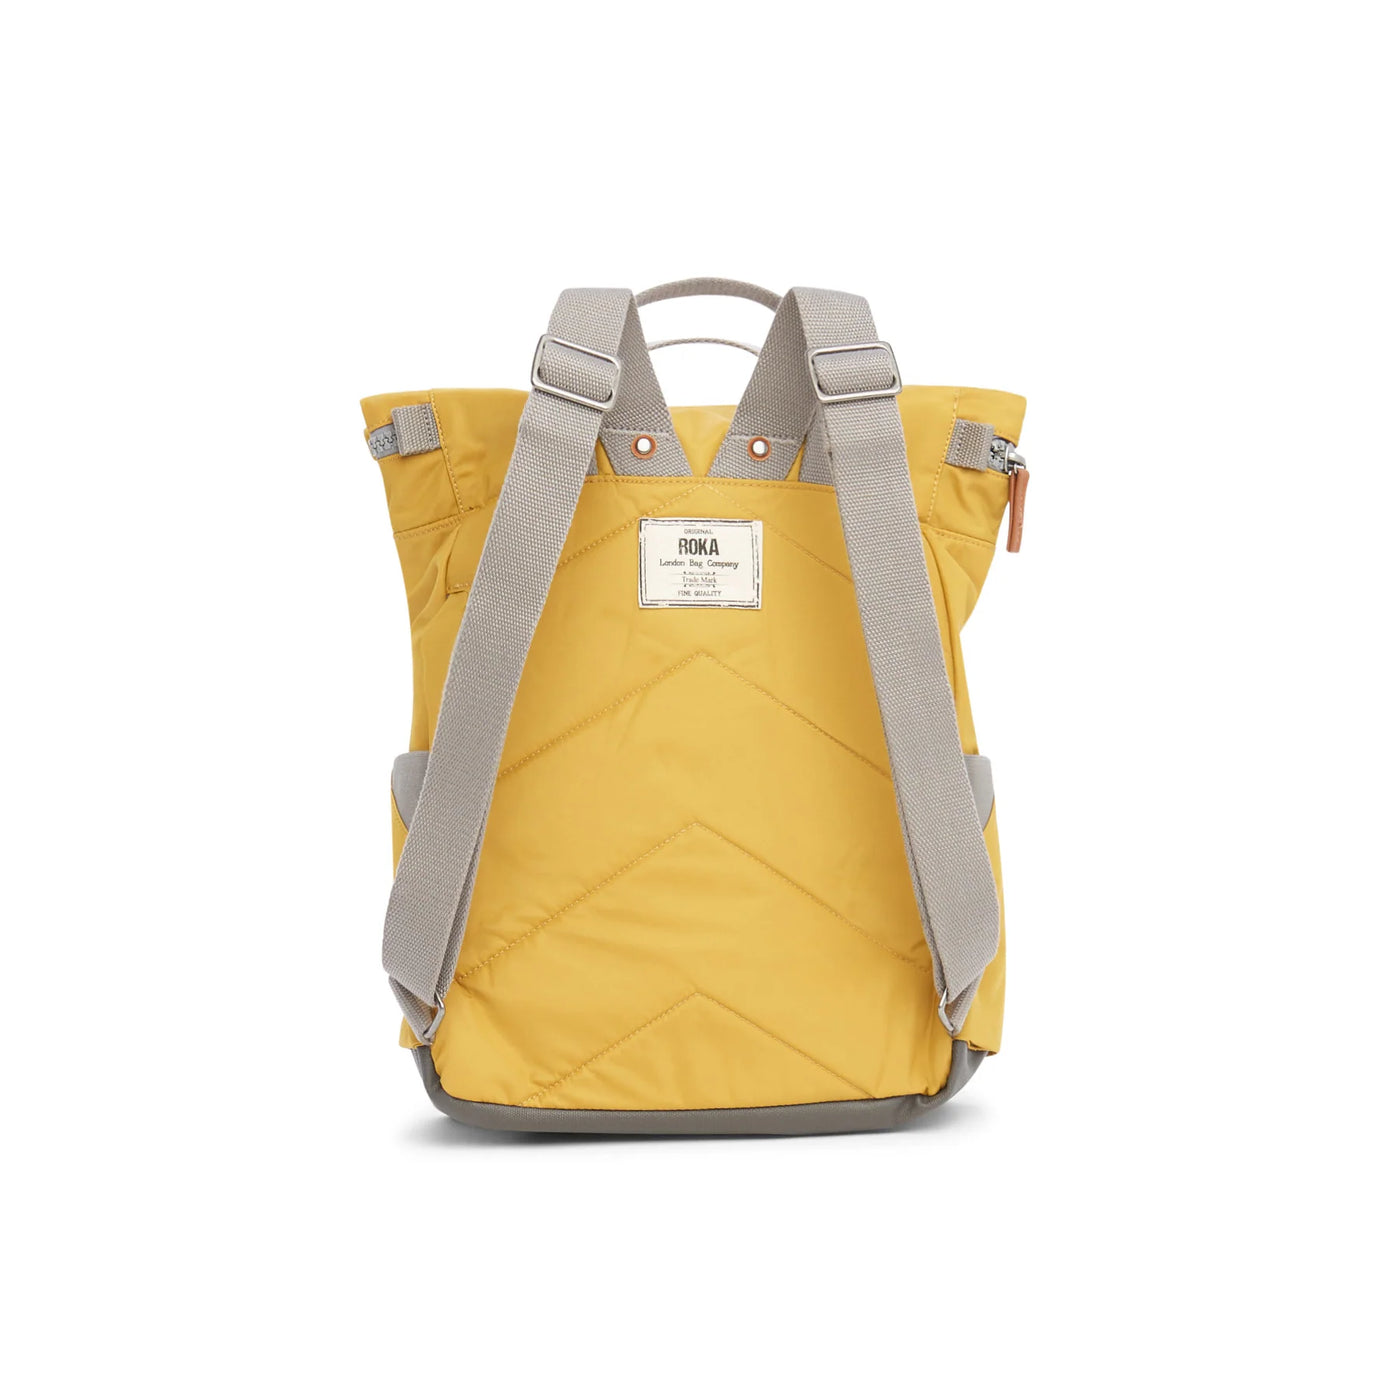 Roka Canfield B Backpack-Recycled Nylon - SMALL - Corn (mustard)